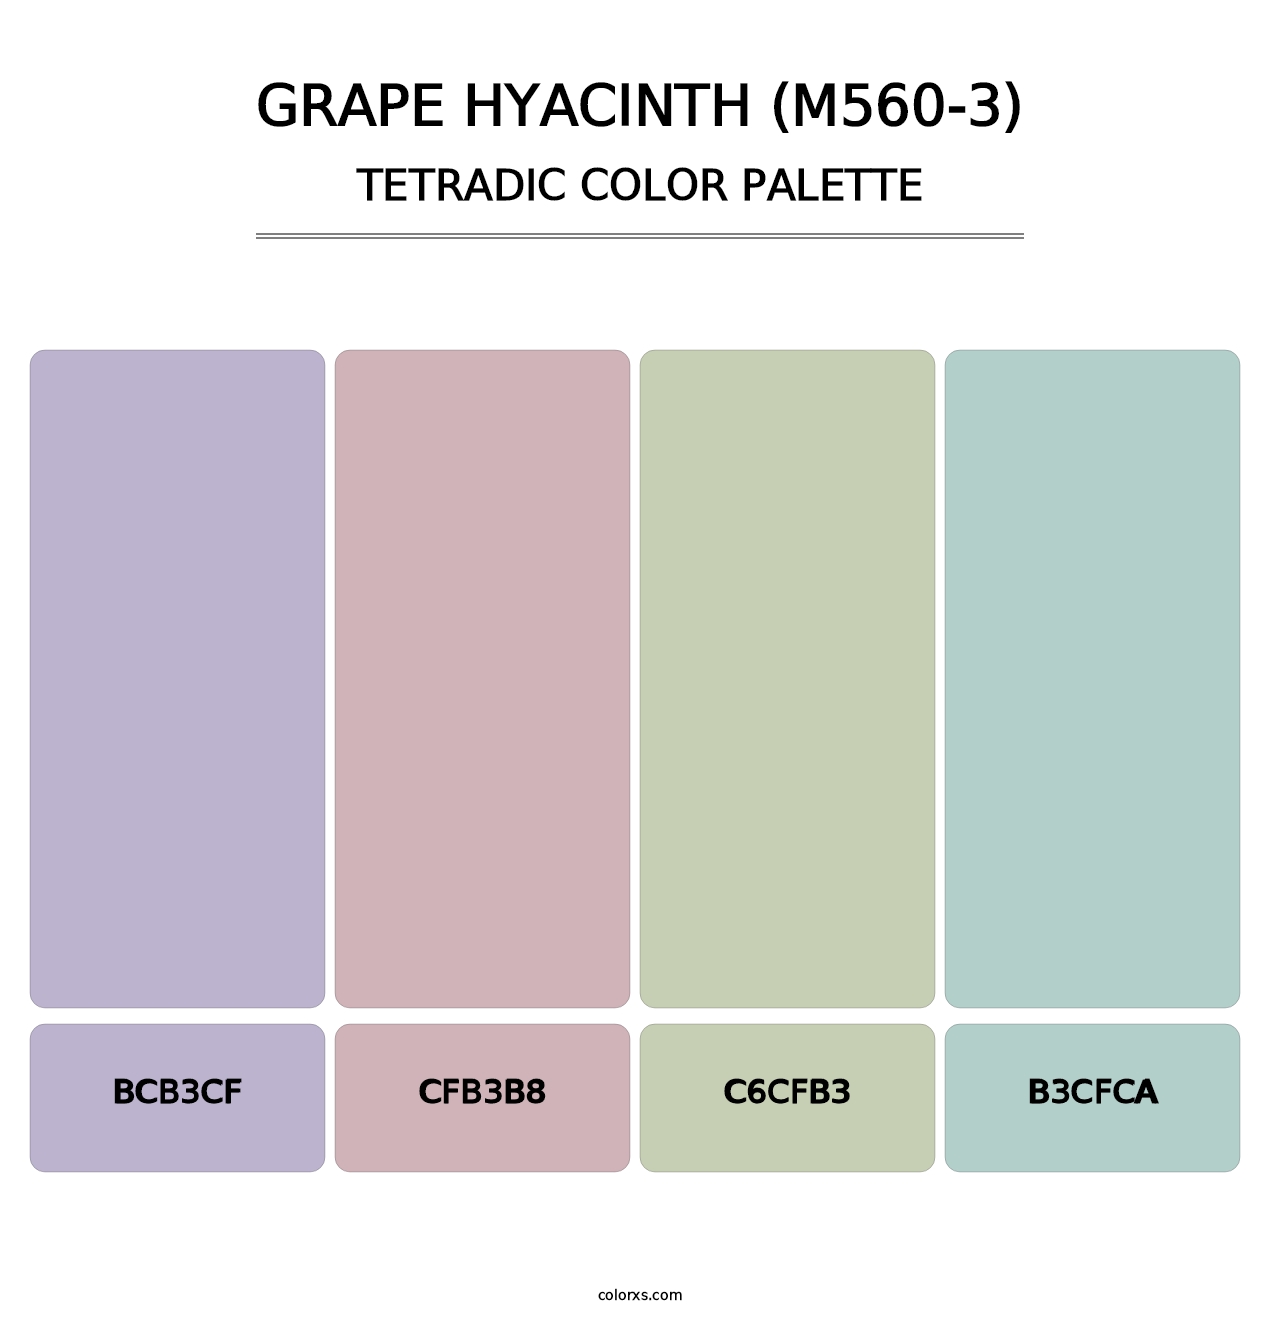 Grape Hyacinth (M560-3) - Tetradic Color Palette